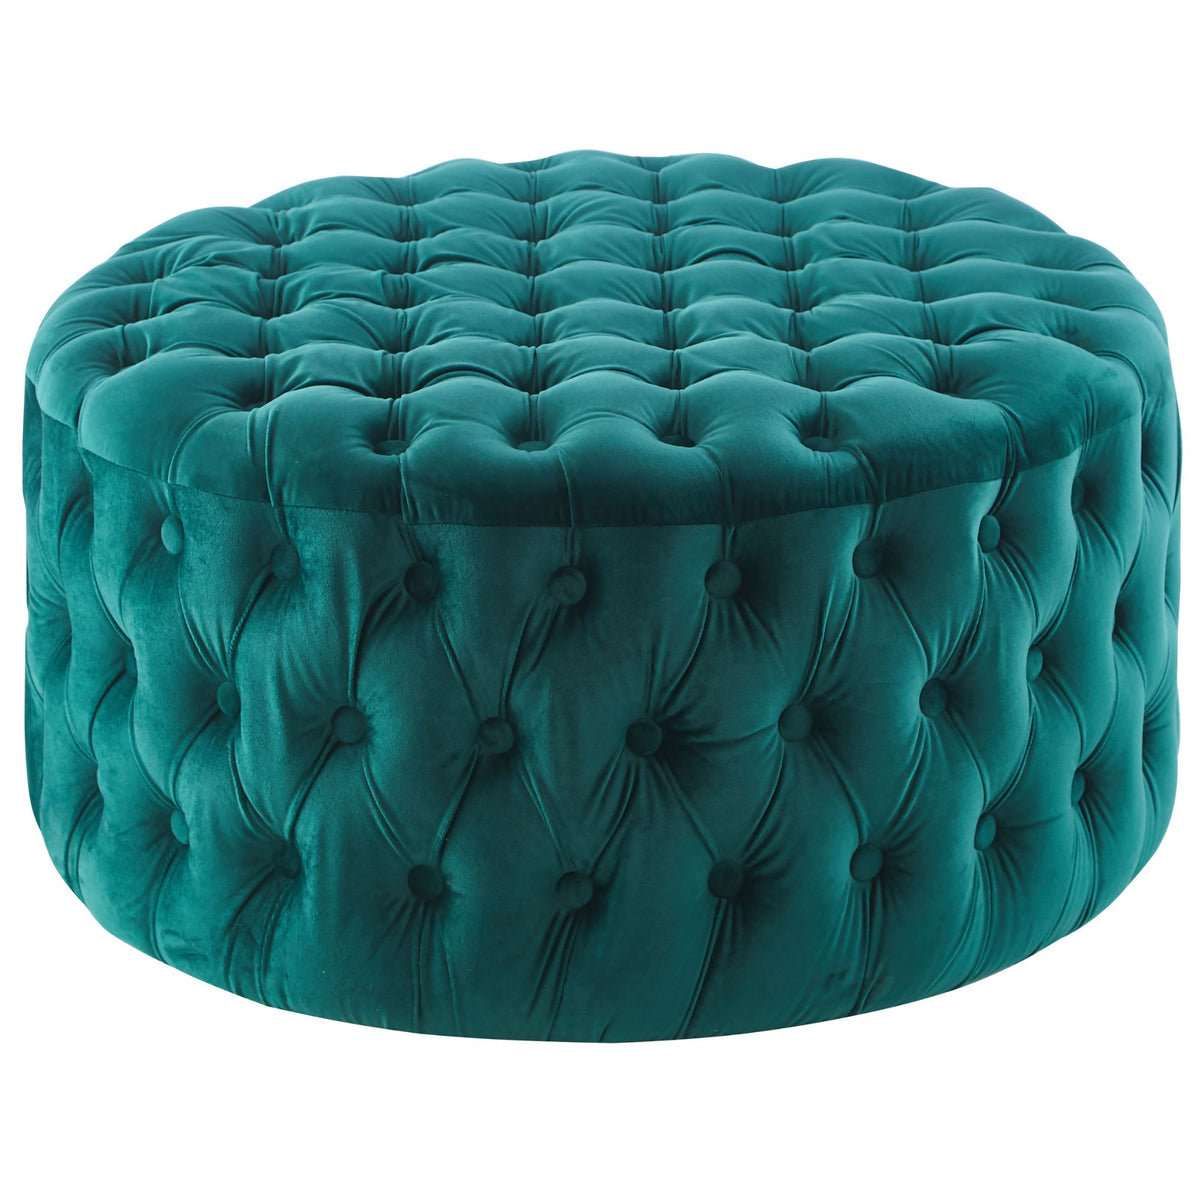 Uzona Tufted Velvet Fabric Round Ottoman Footstools - Green - Notbrand